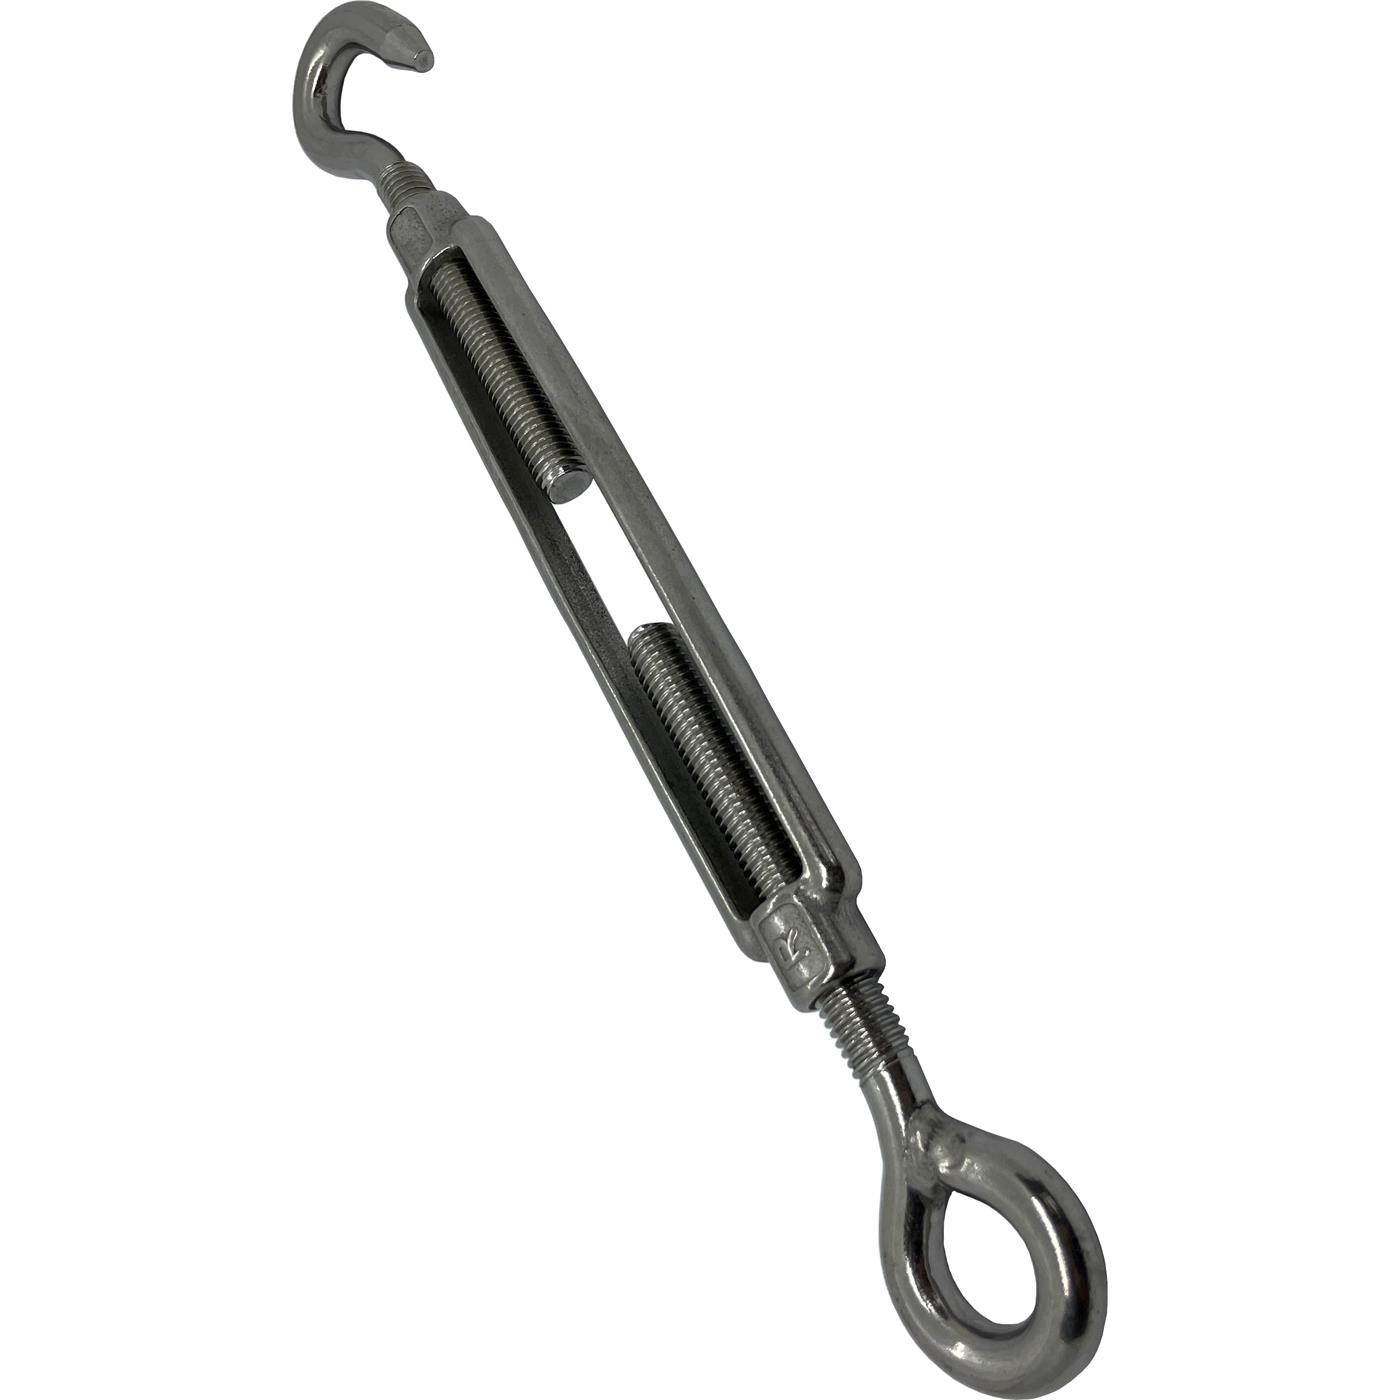 Rope tensioner Eyelet-Hook Stainless steel V4A 316 M4 Turnbuckle Shroud clamp